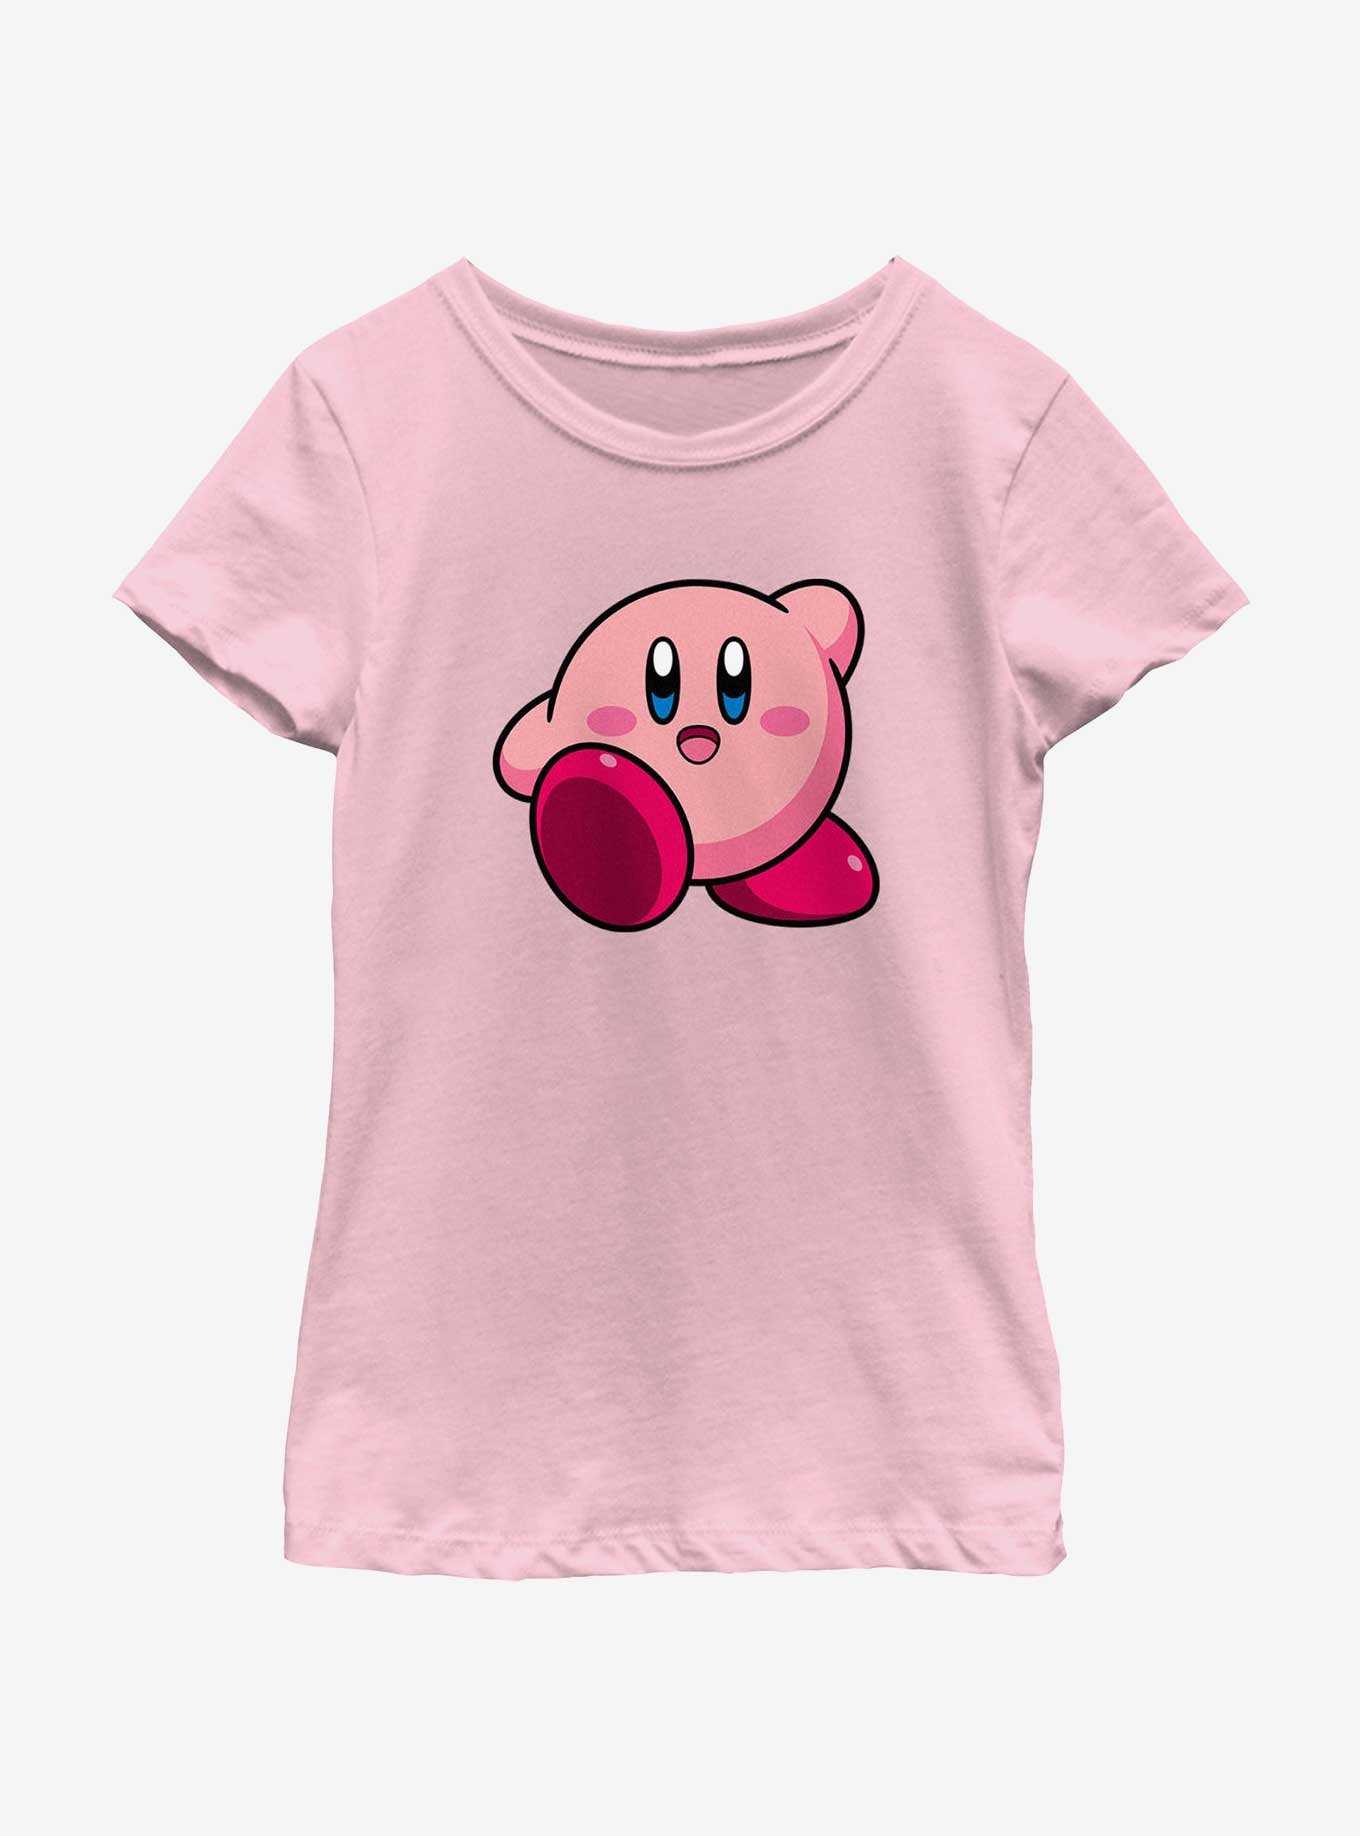 Kirby Big Kirby Waving Youth Girls T-Shirt, , hi-res